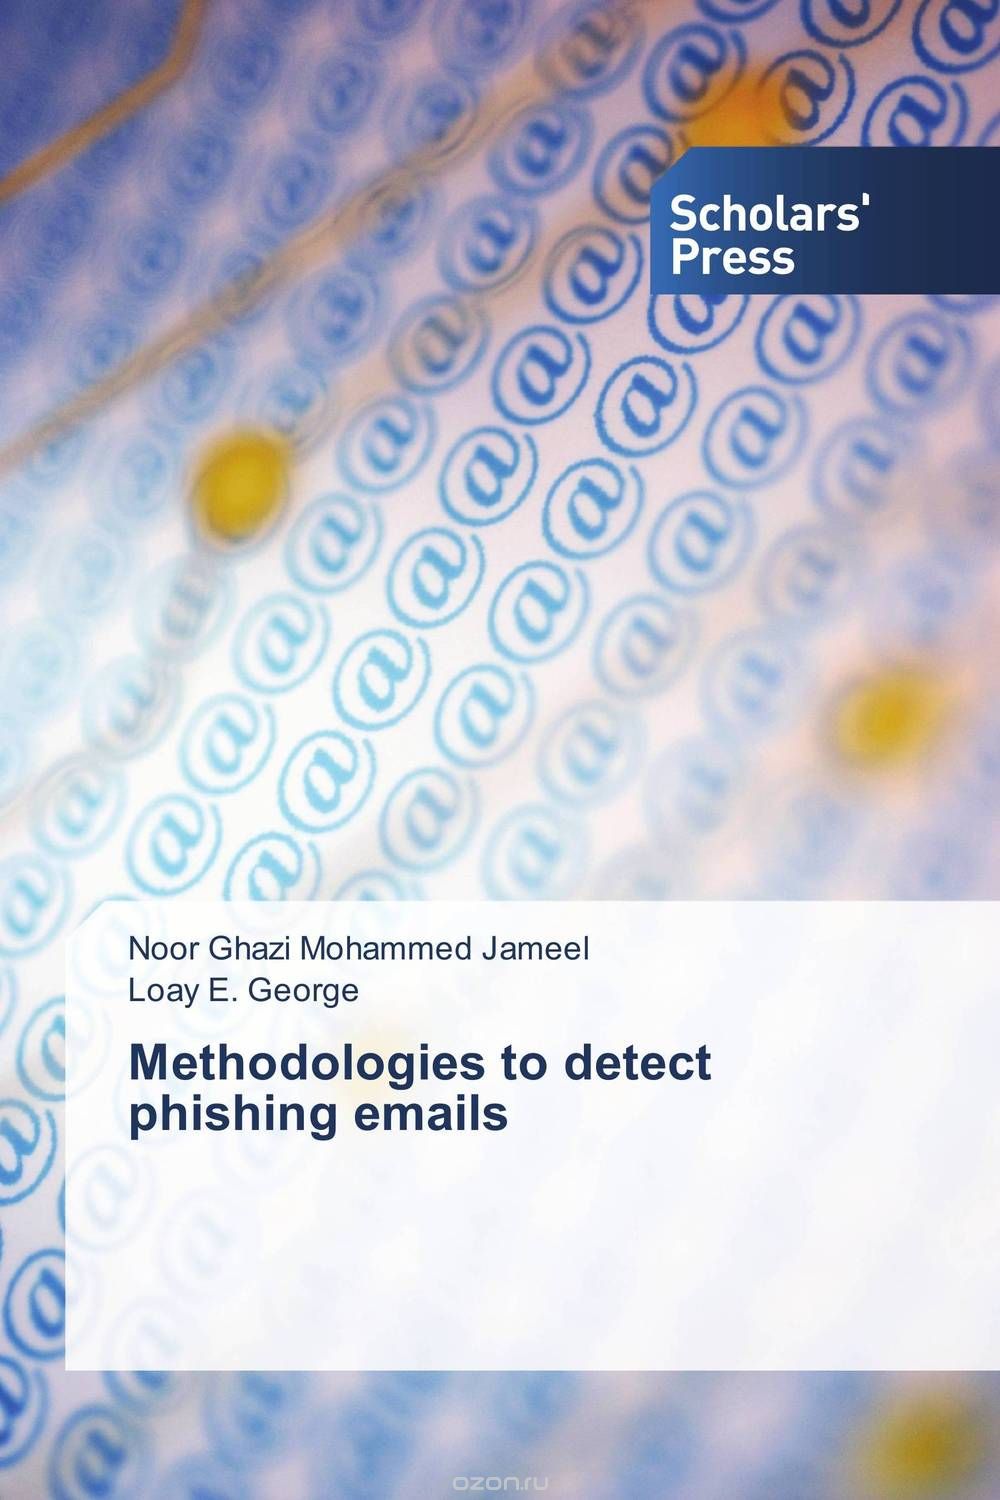 Скачать книгу "Methodologies to detect phishing emails"